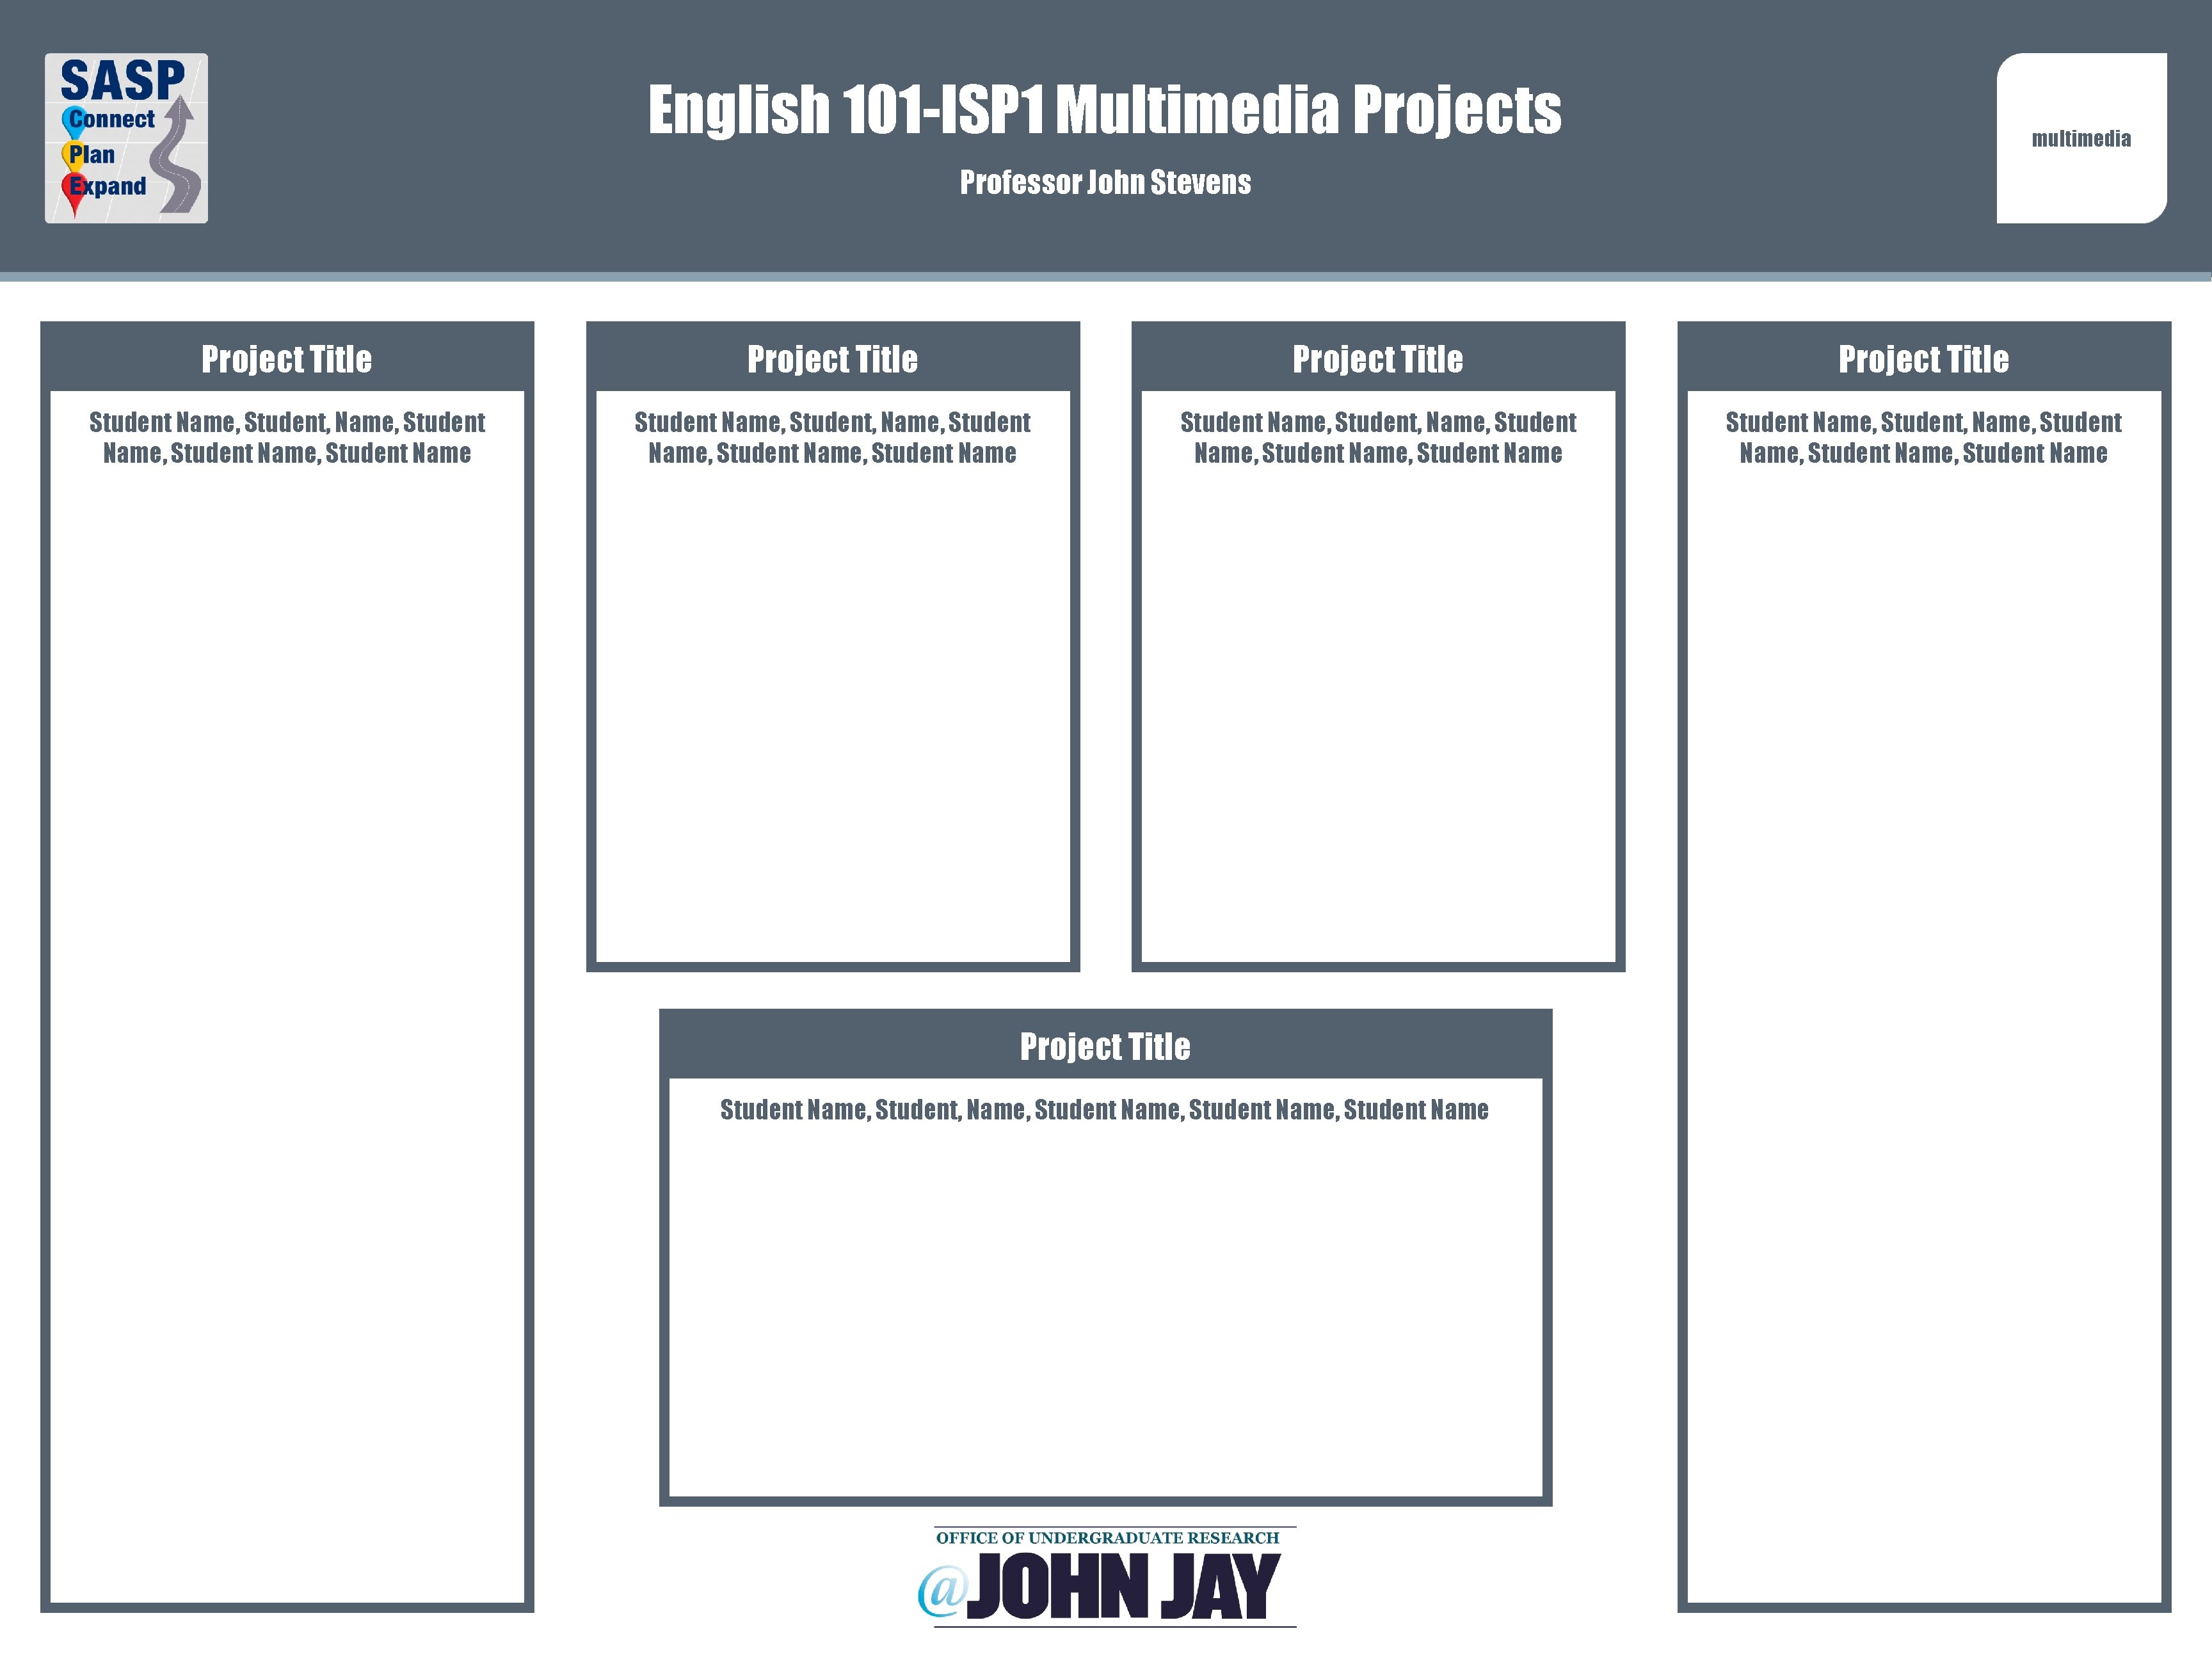 English 101 -ISP 1 Multimedia Projects multimedia Professor John Stevens Project Title Student Name,